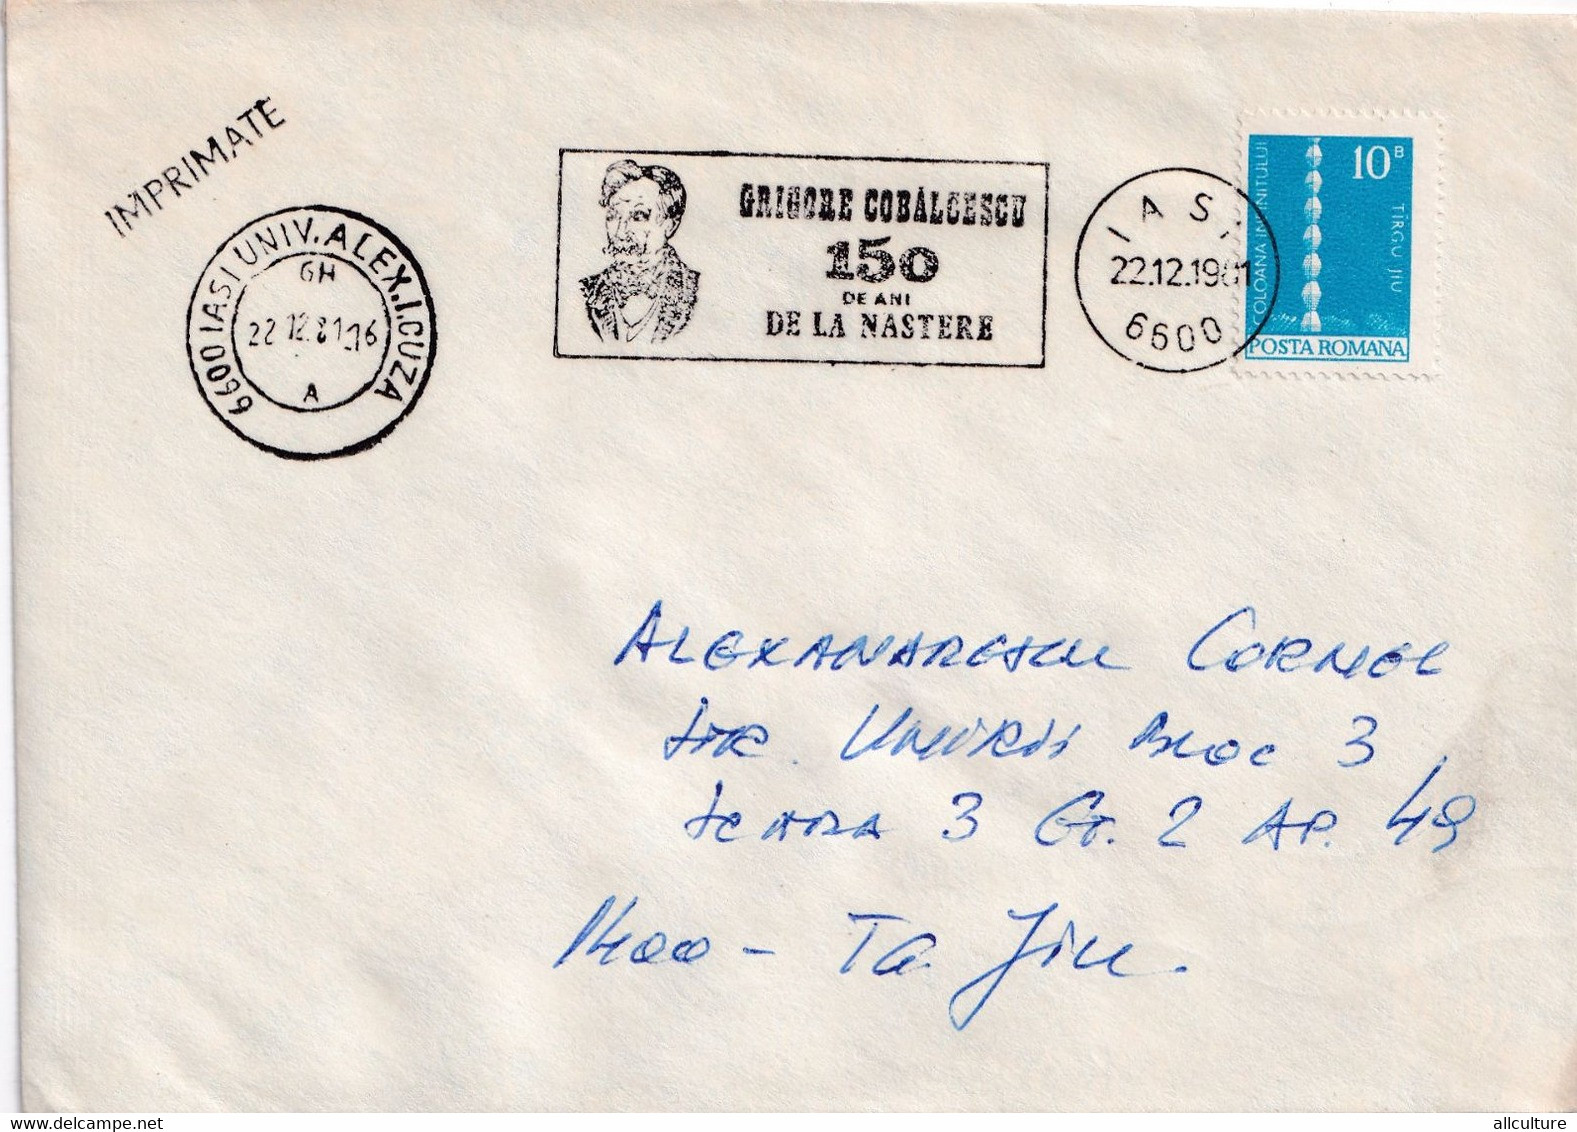 A2980 -  Grigore Cobalescu, Geolog Roman, Universitatea Alexandru Ioan Cuza Iasi 1981 Romania Posta Romana - Lettres & Documents